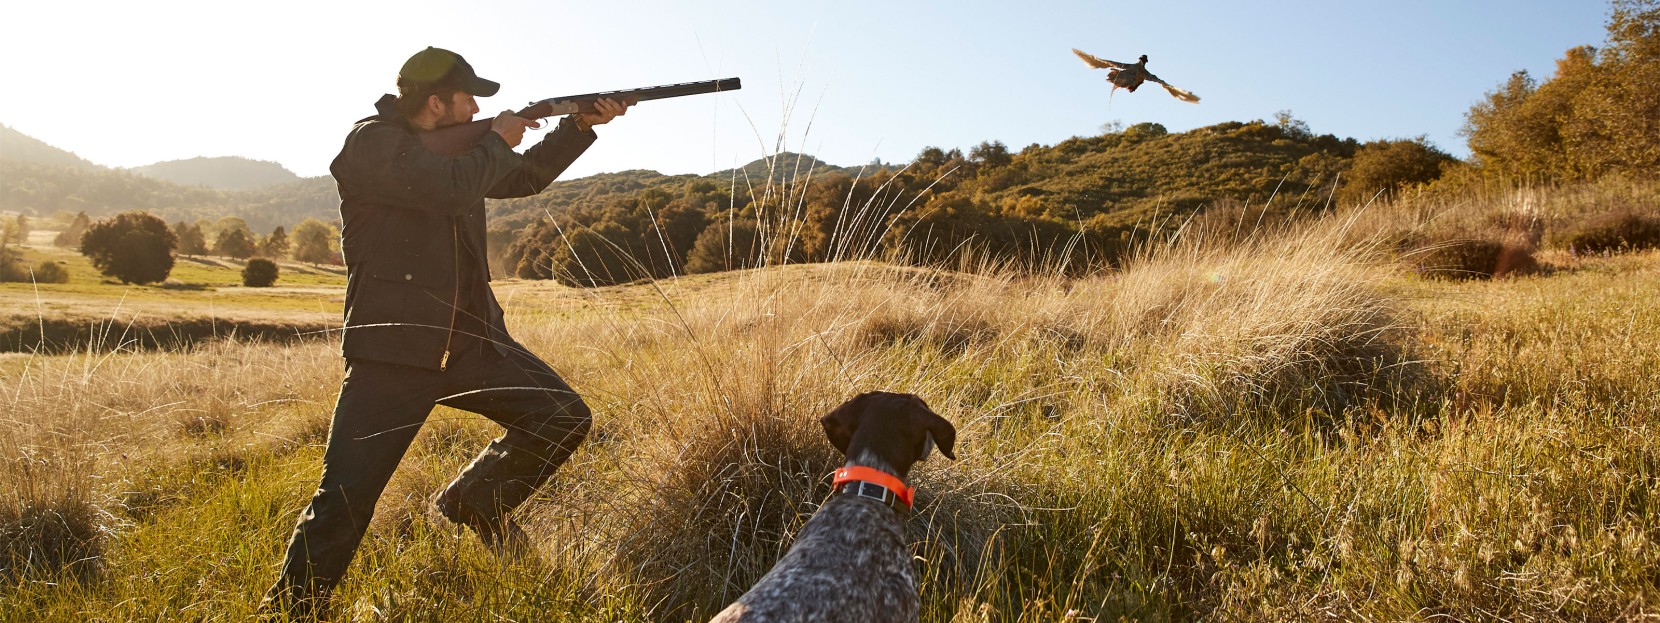 Hunter taking aim at a flying bird, dog at his side.